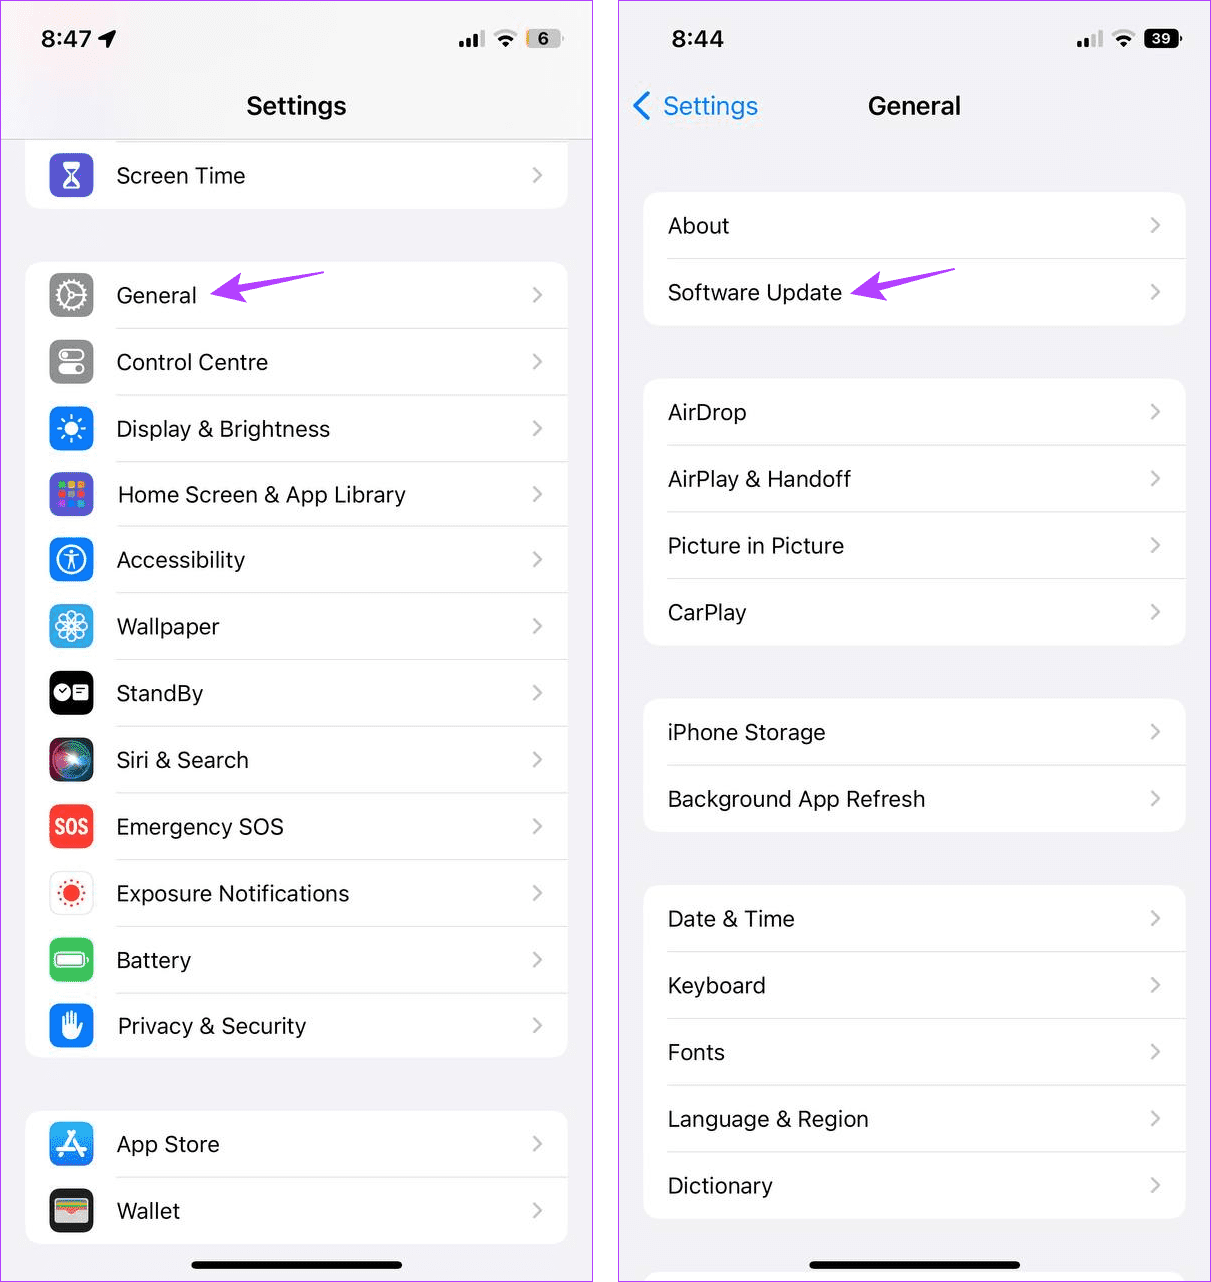 Seis formas de reparar la aplicación Journal de iOS 17 que falta o no funciona